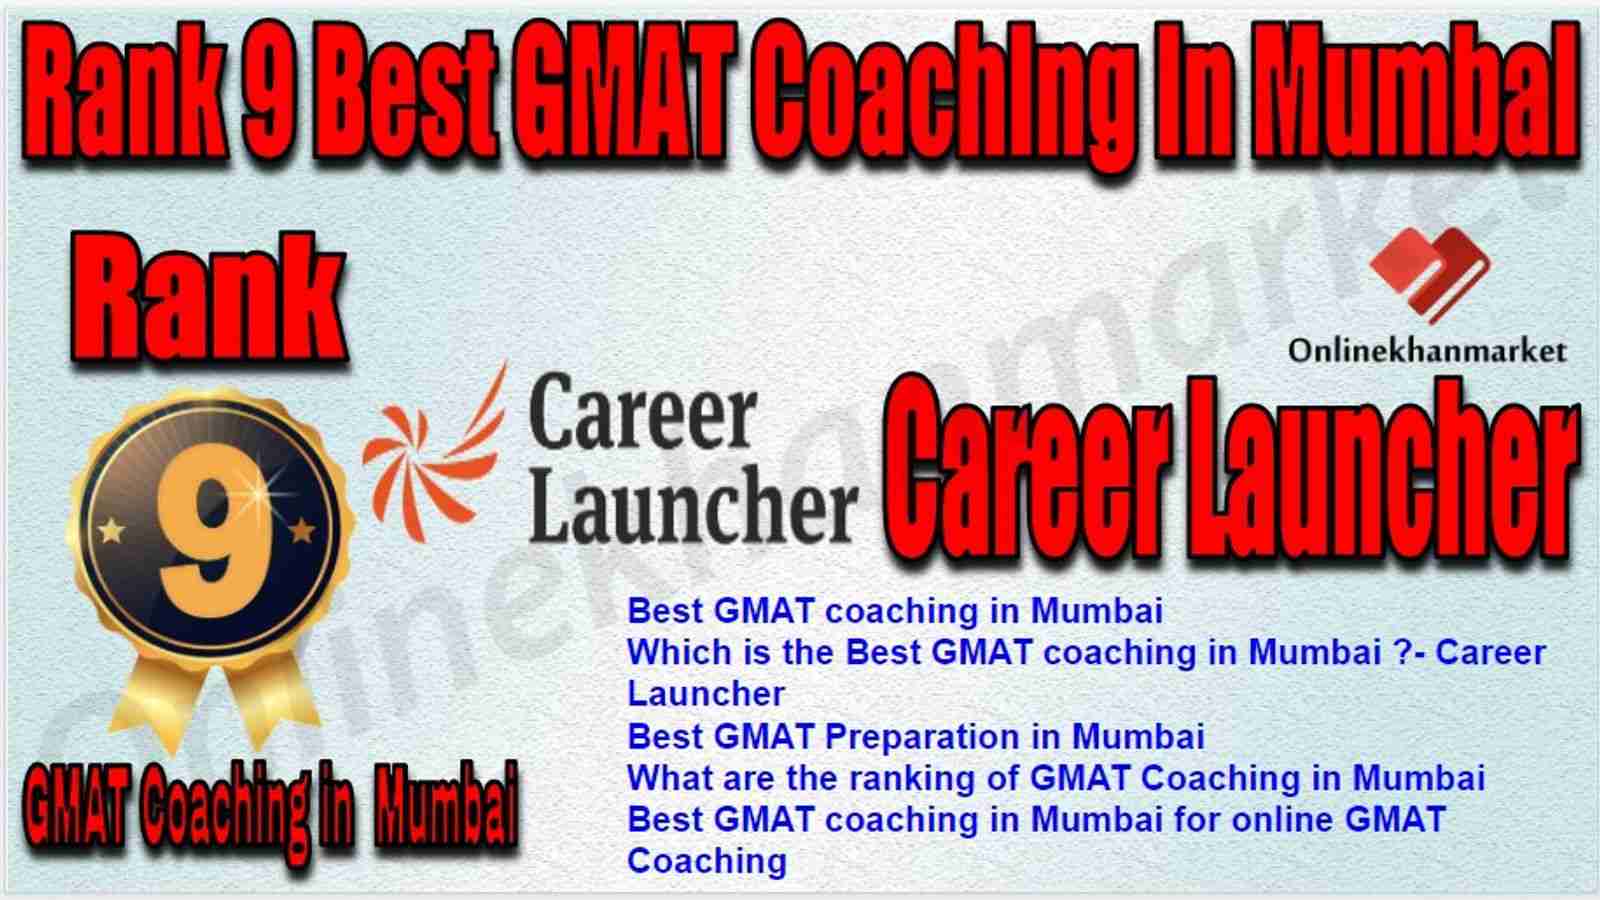 Rank 9 Best GMAT Coaching in Mumbai